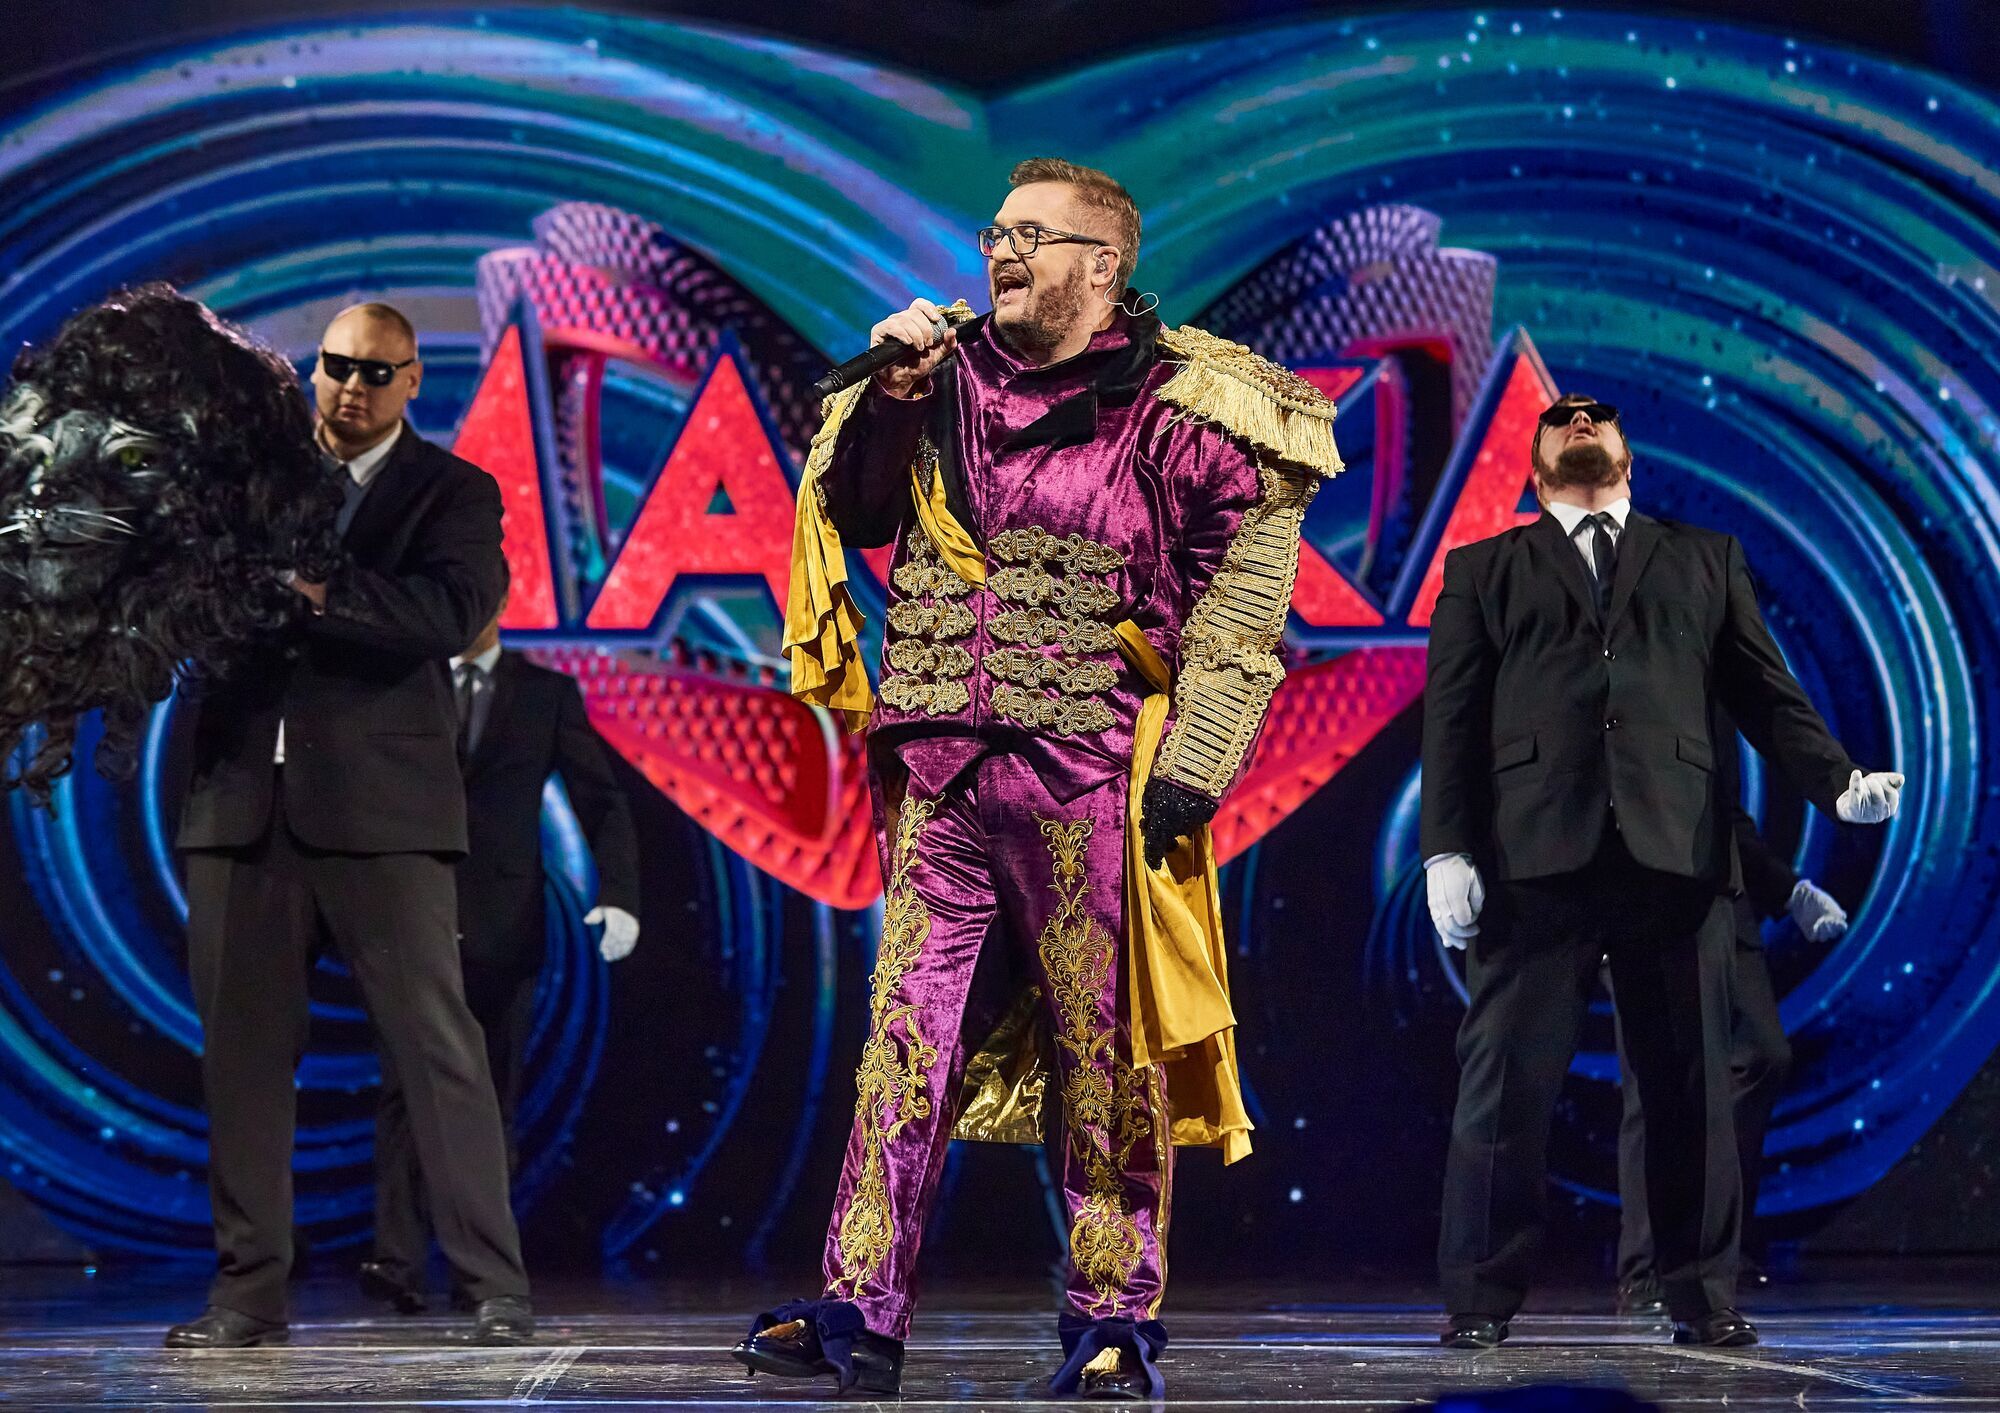 Александр Пономарев в образе Льва на шоу "Маска"